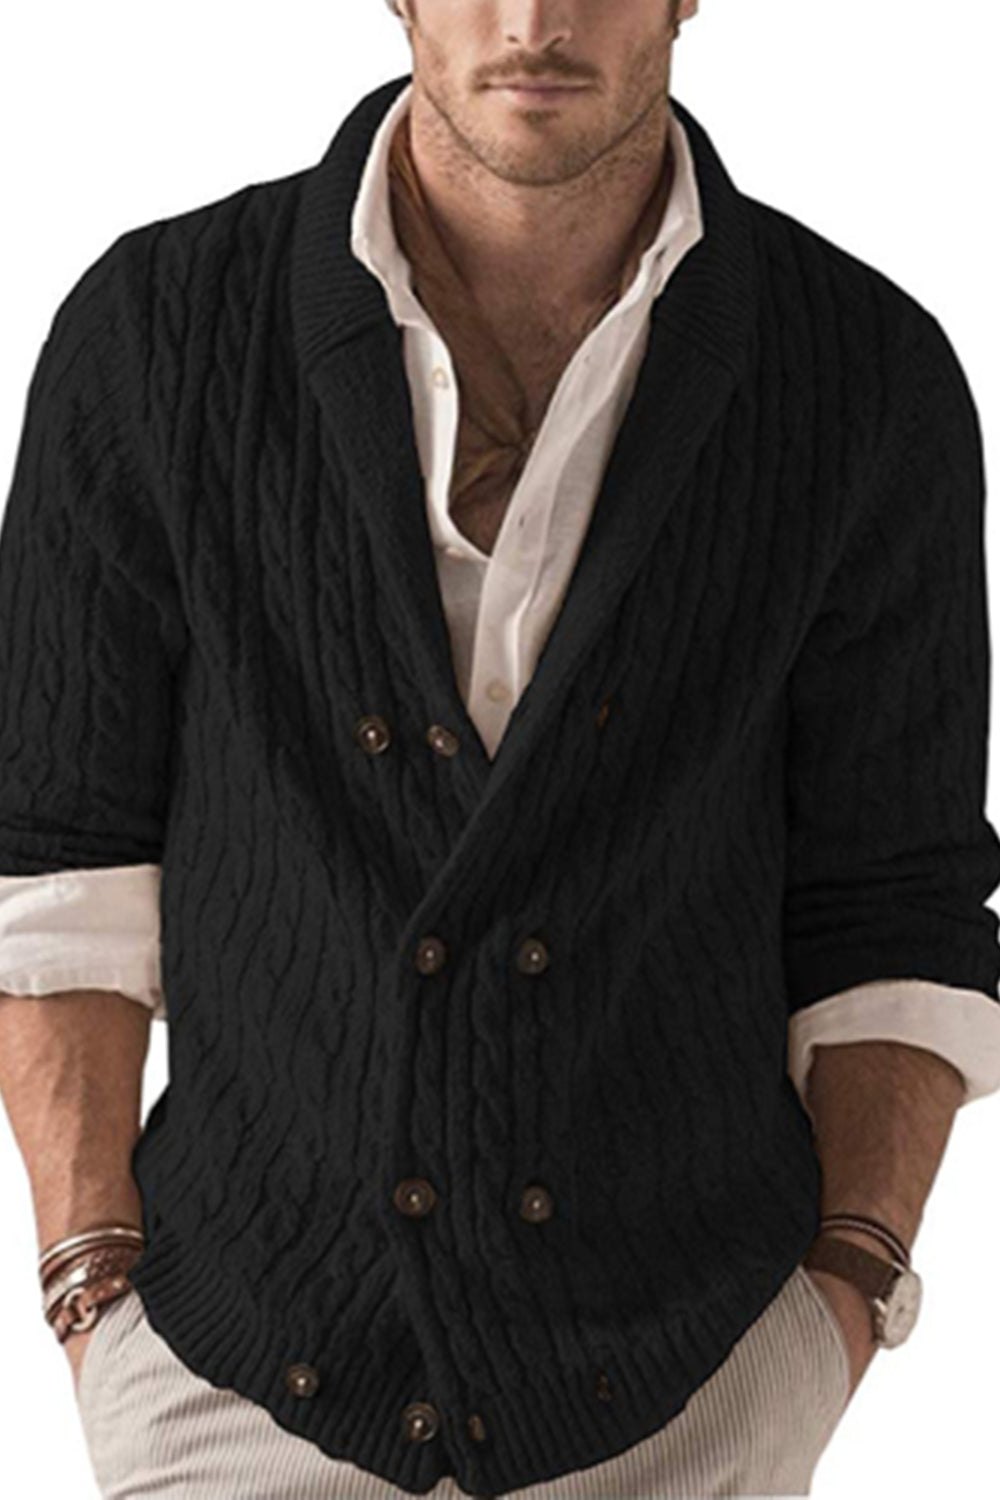 Iyasson Men's Knit V-neck Cardigan Sweater Coat